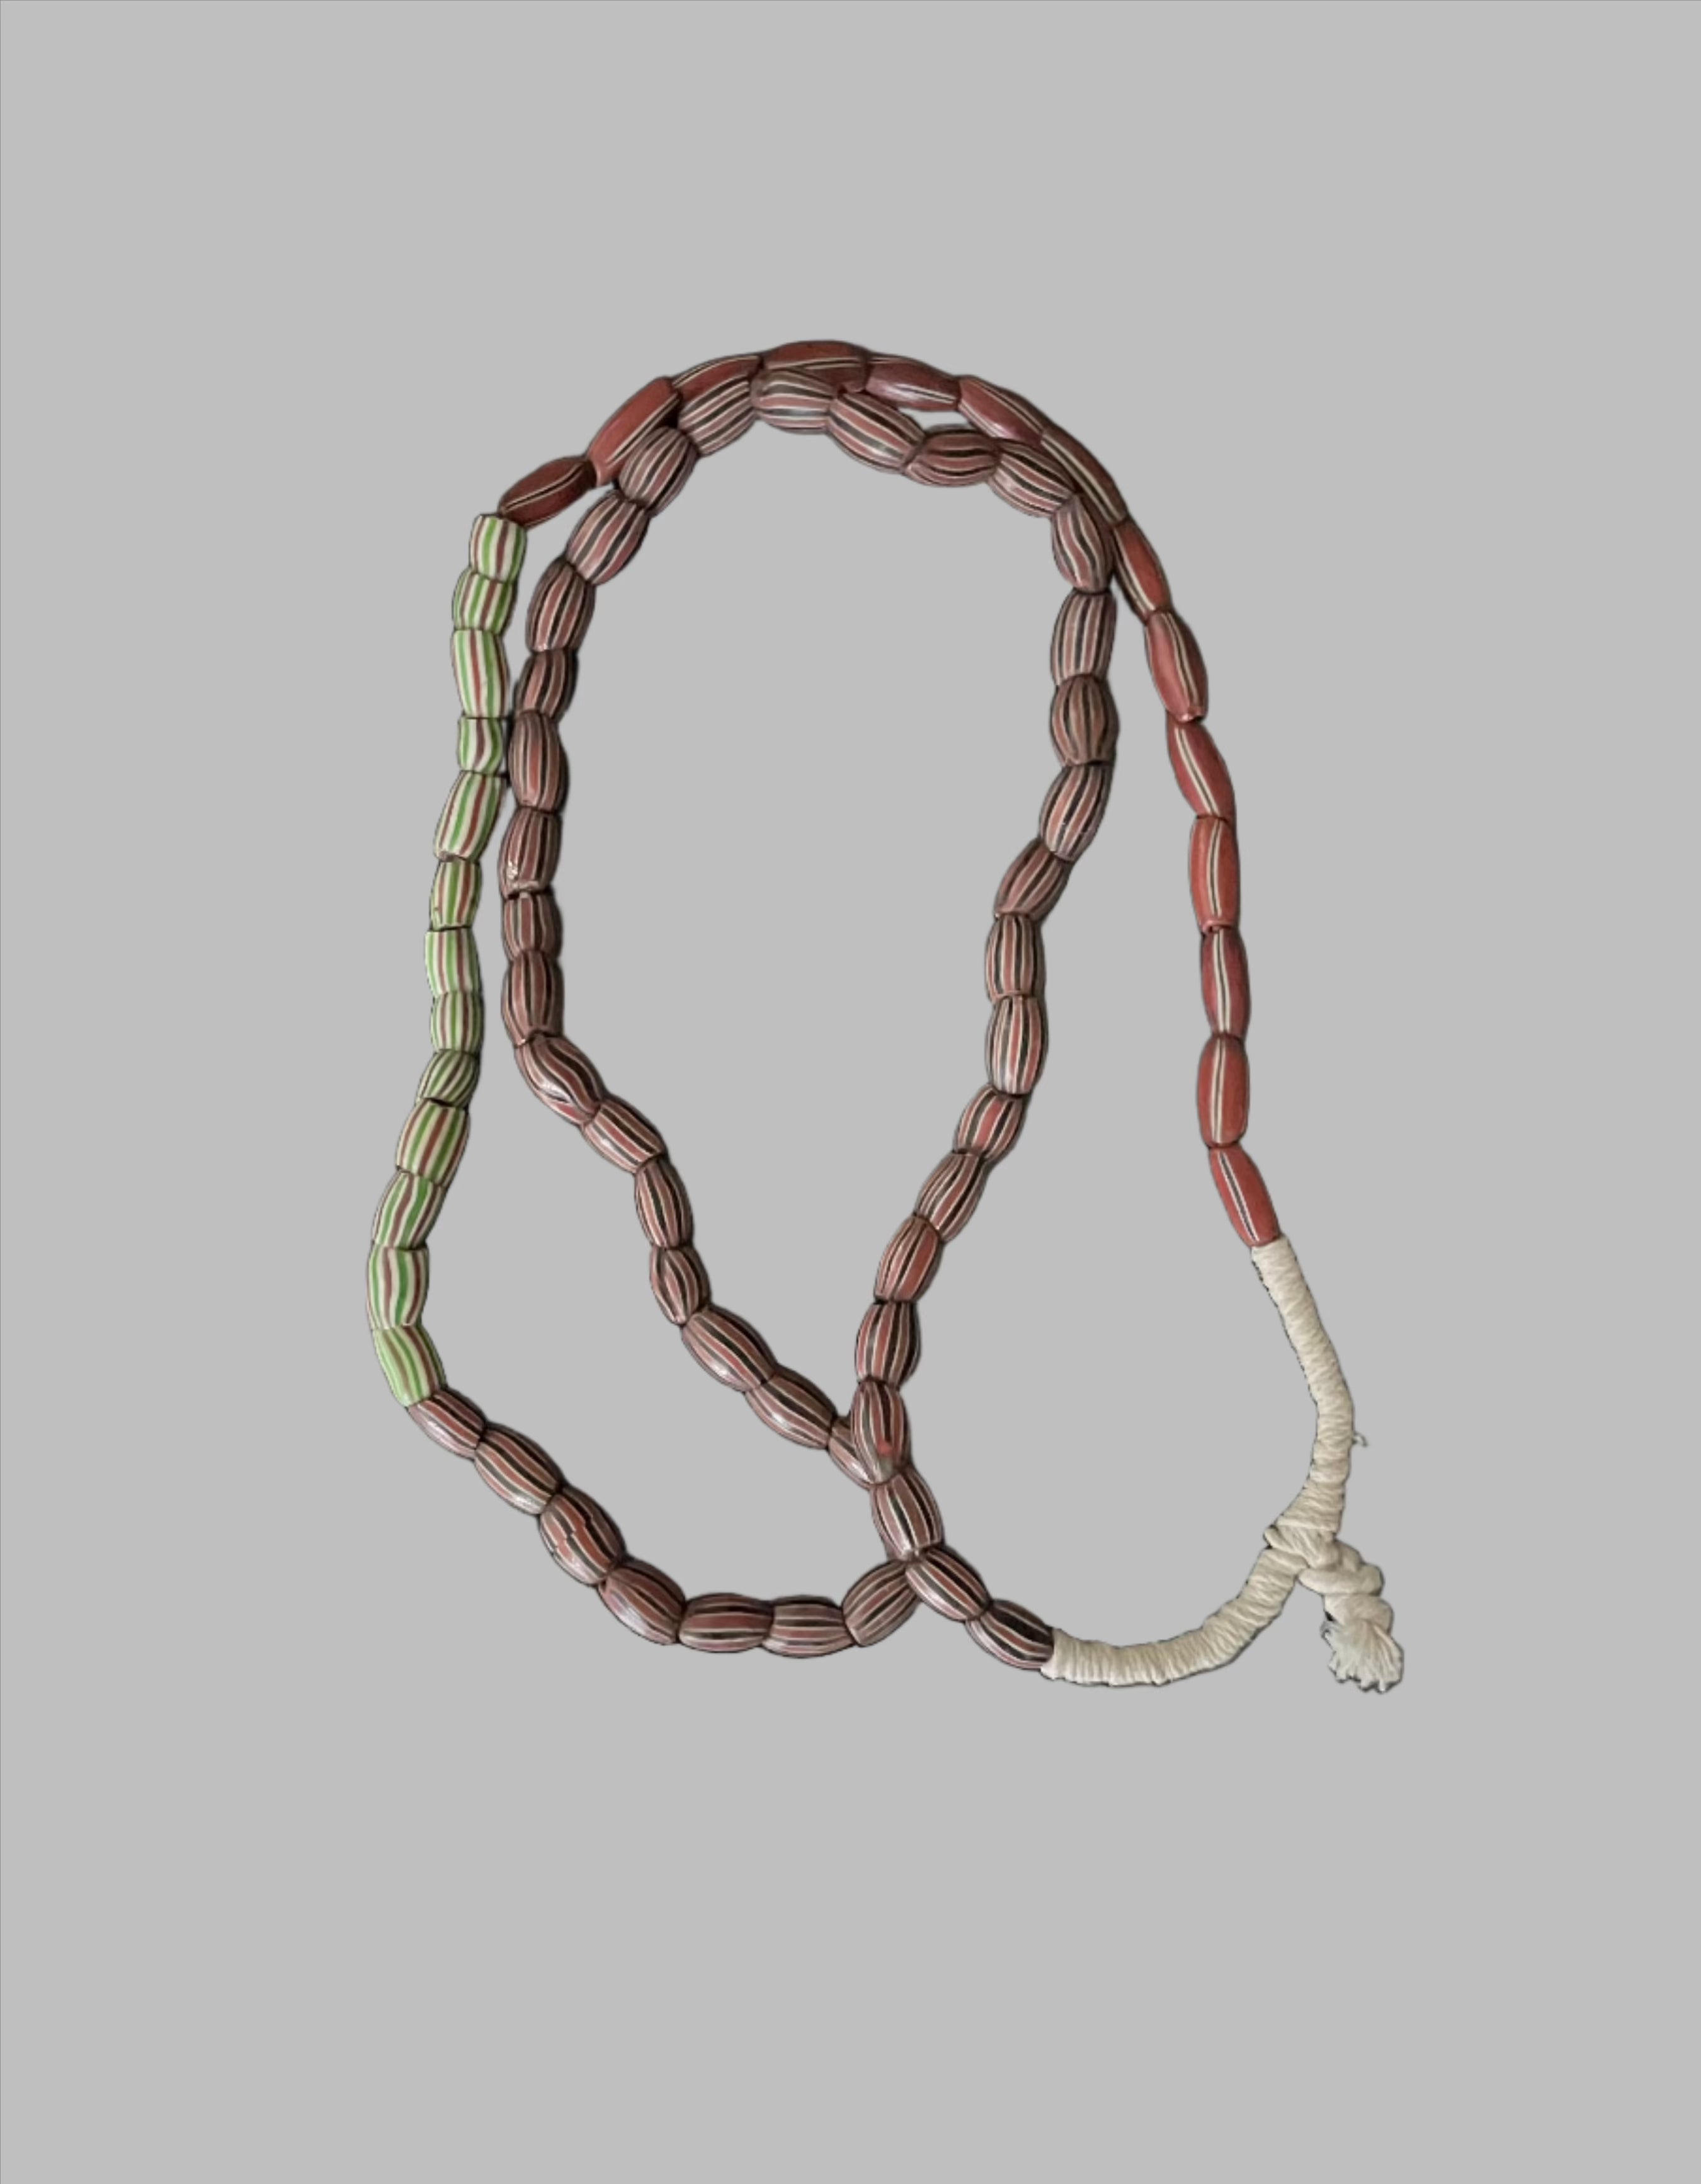 Tribal Trade Beads - African Plural Art - African Art - Beads - Embellishments - Trims - Venetian Chevron Millefiori Mixed Beads, African Glass Trade Beads